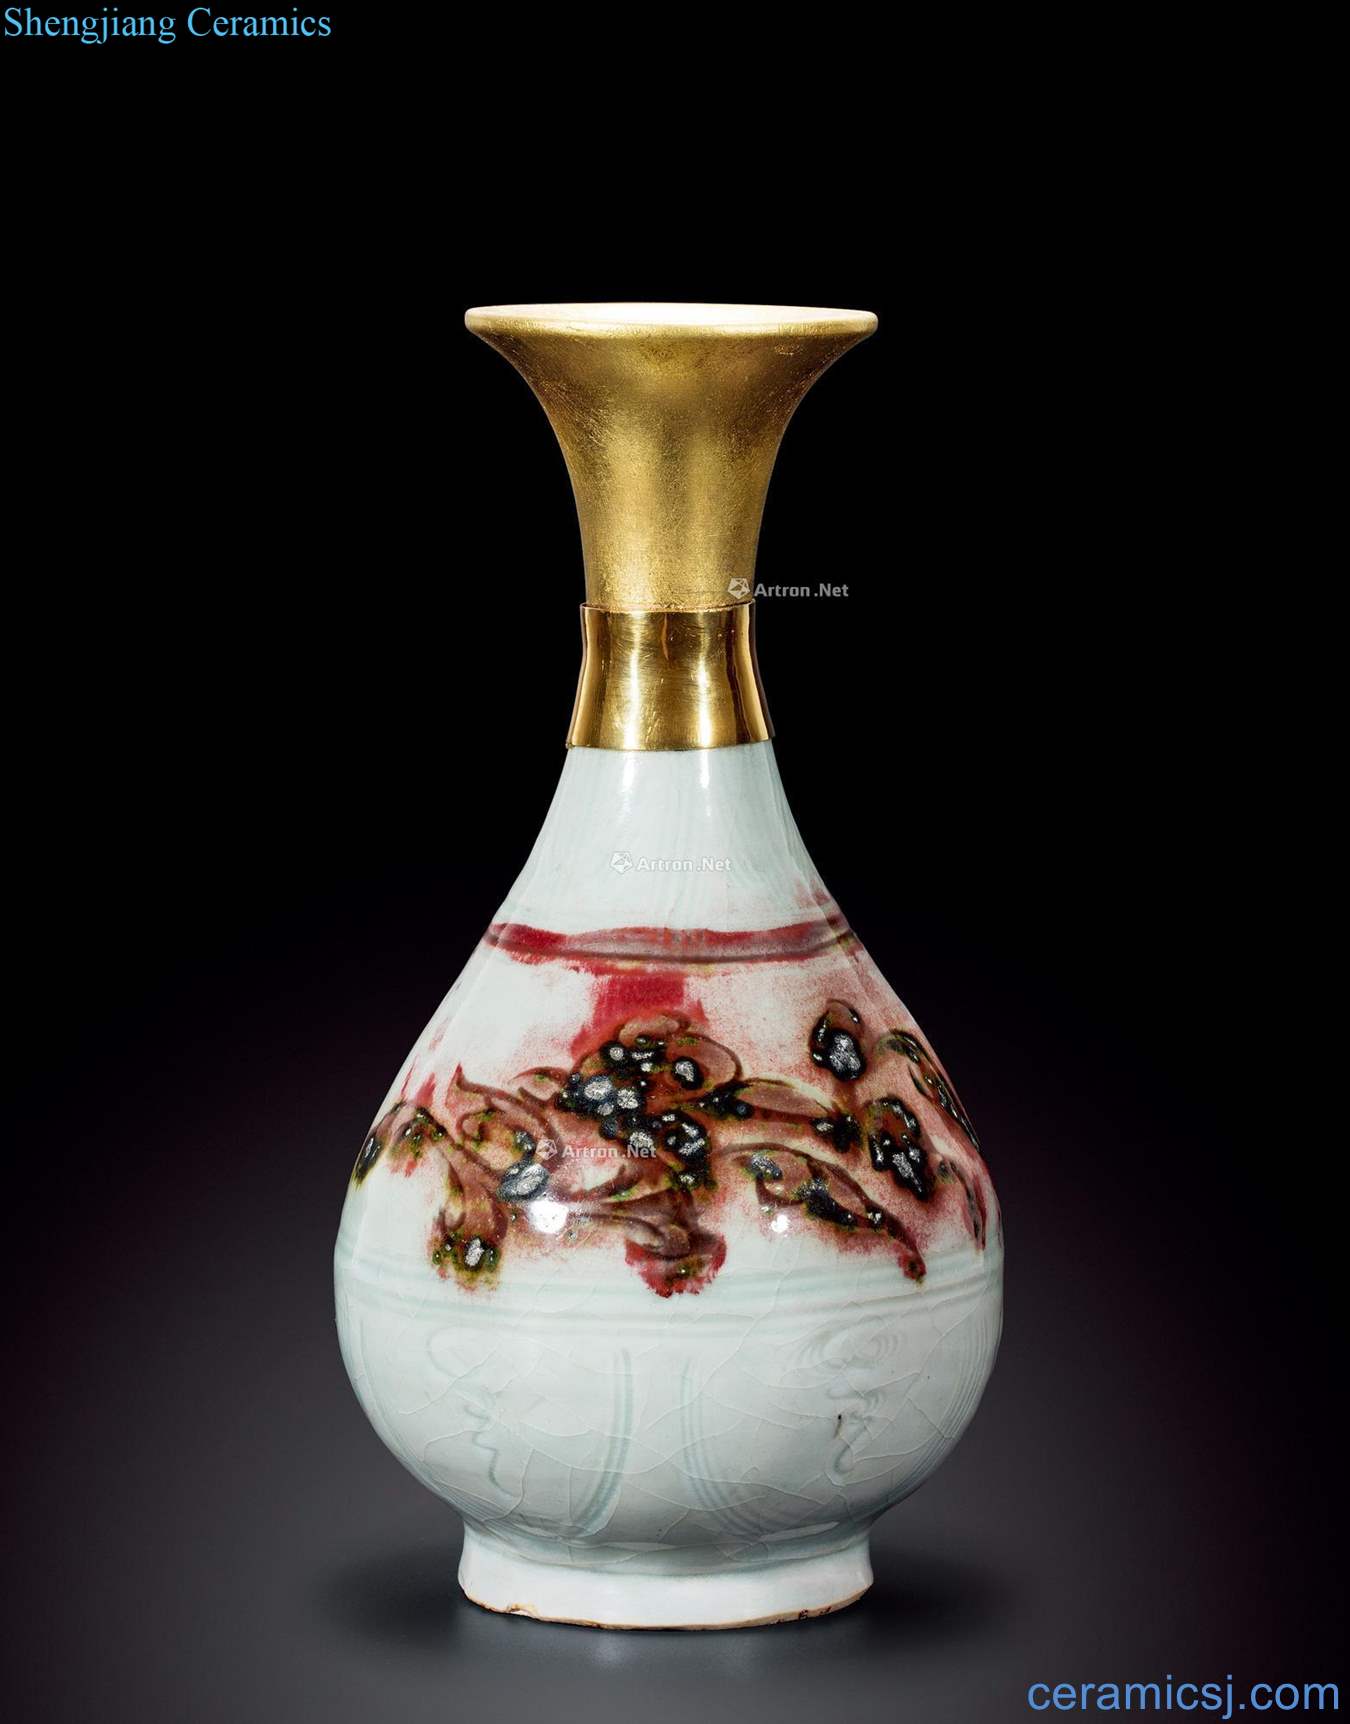 The yuan dynasty Youligong okho spring bottle